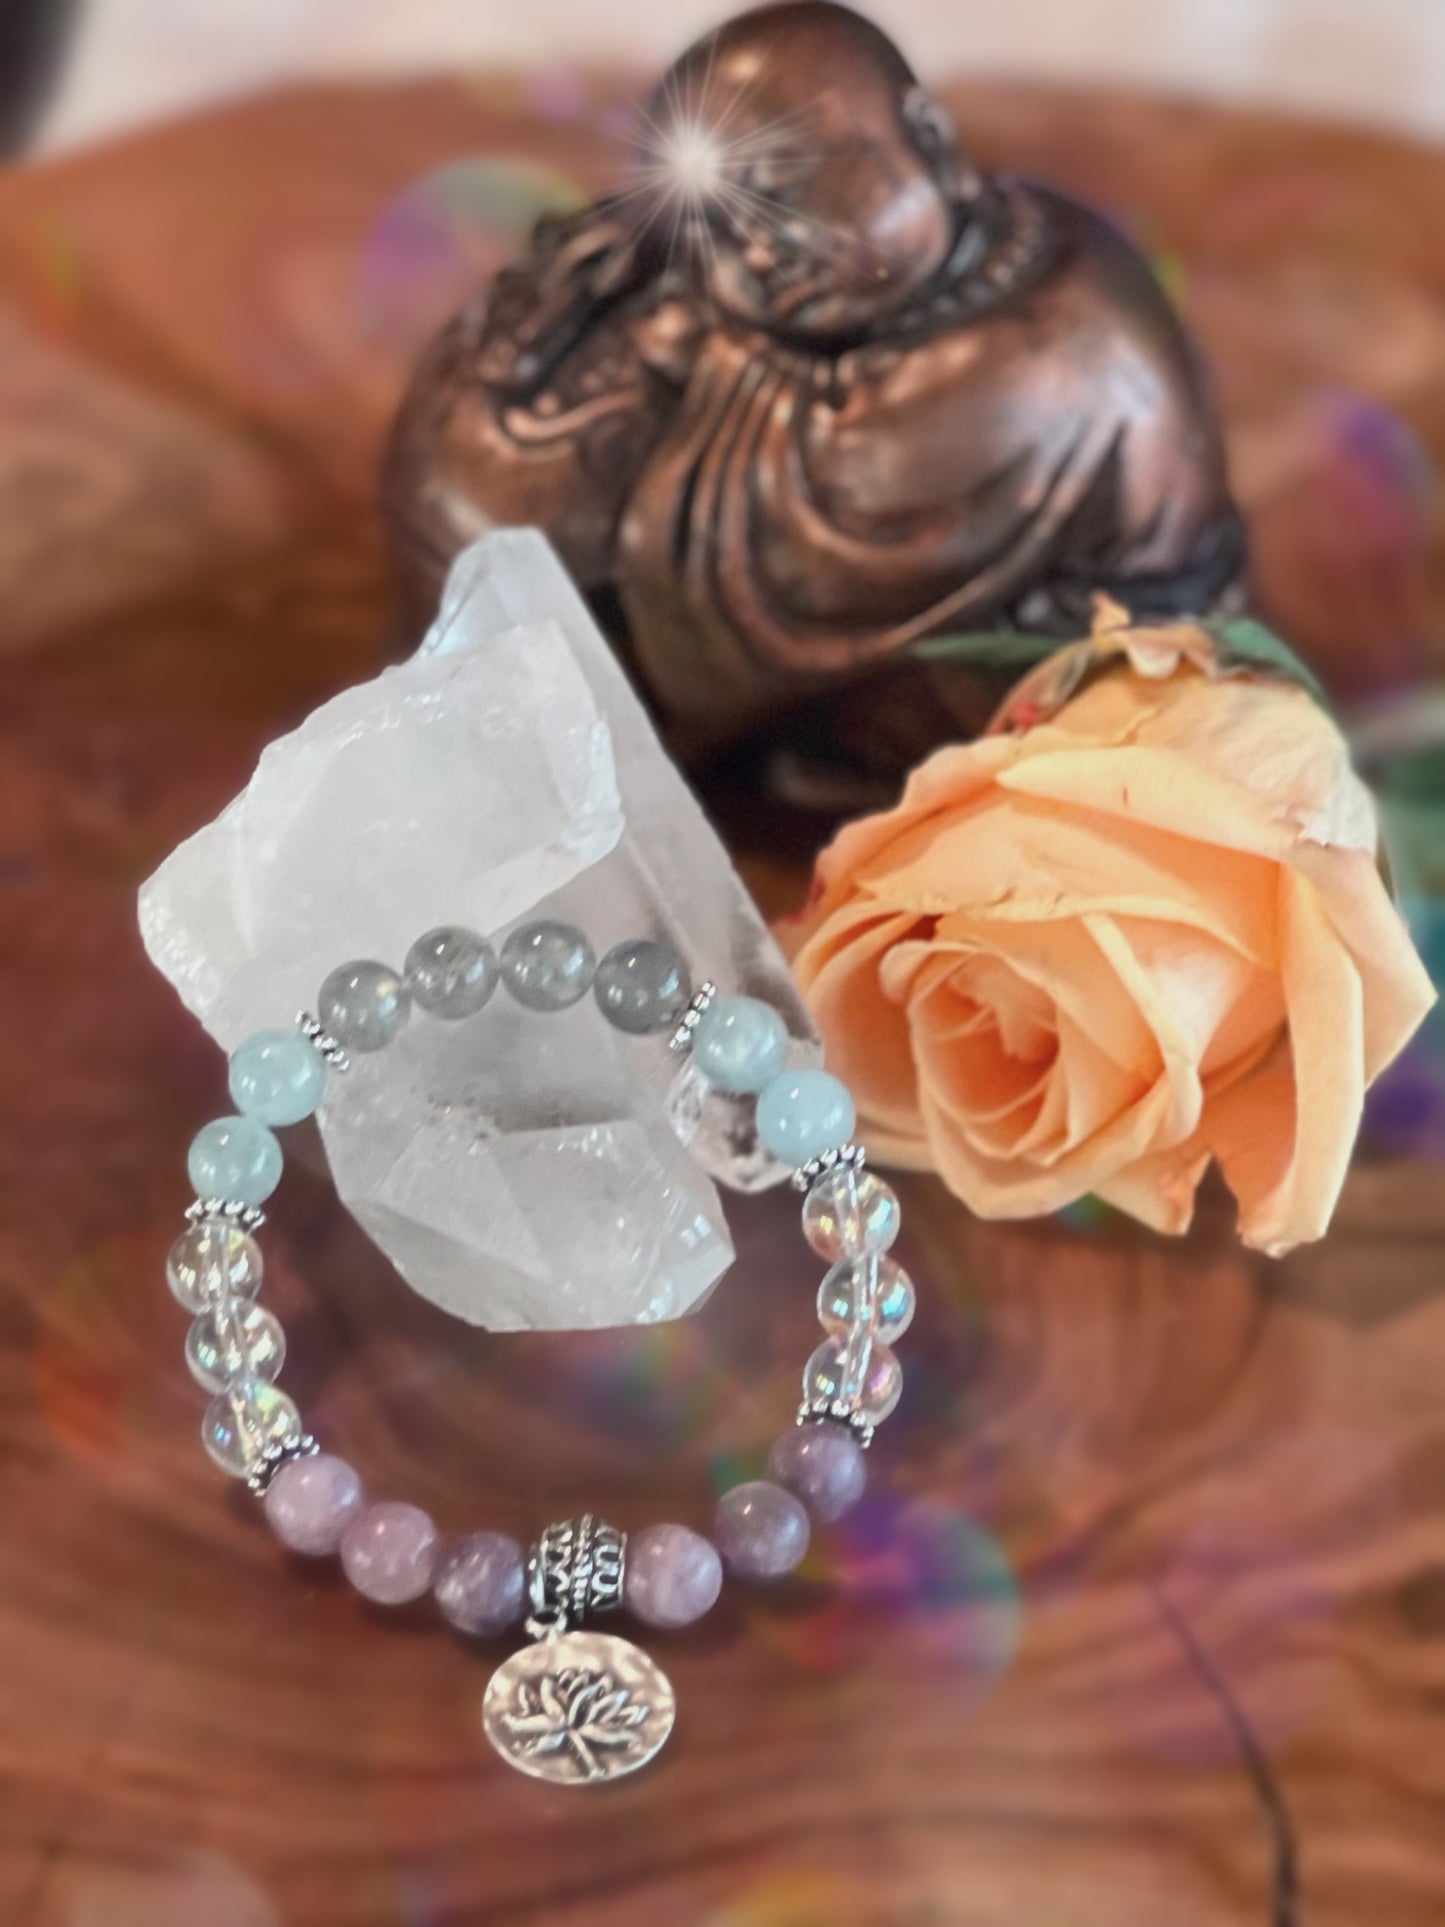 Labradorite, Angel Aura Quartz, Lepidolite, & Aquamarine Bracelet for Spiritual Communication